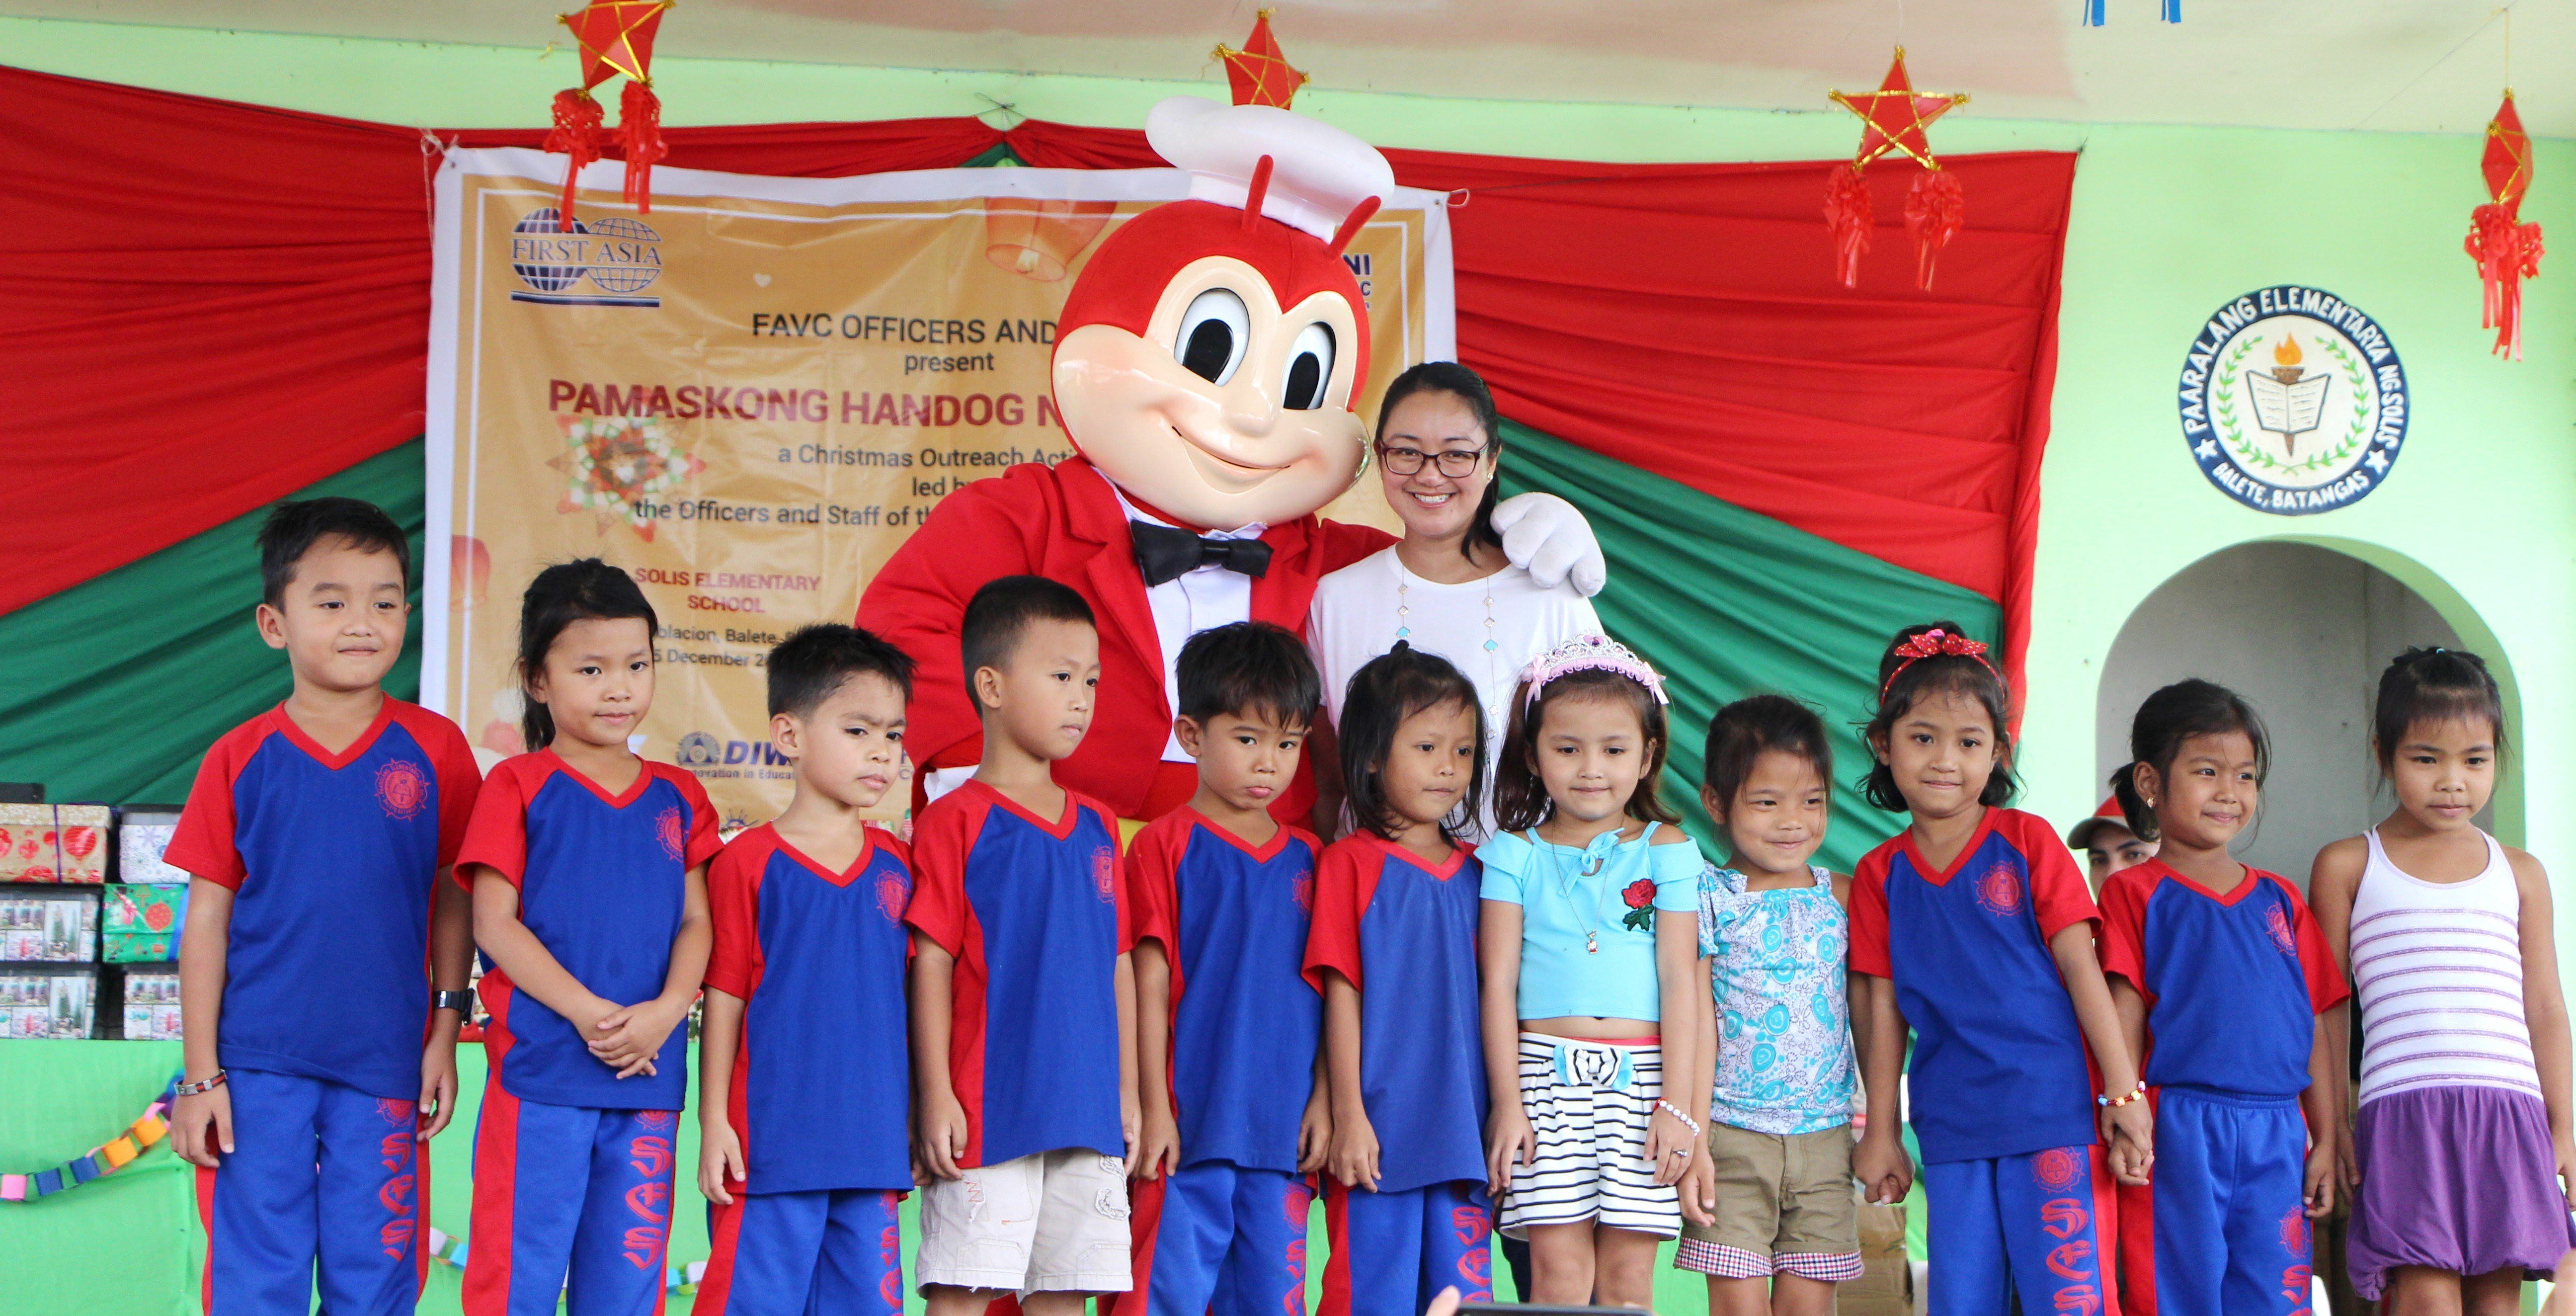 Team First Asia to impart Christmas spirit through Pamaskong Handog ng First Asia